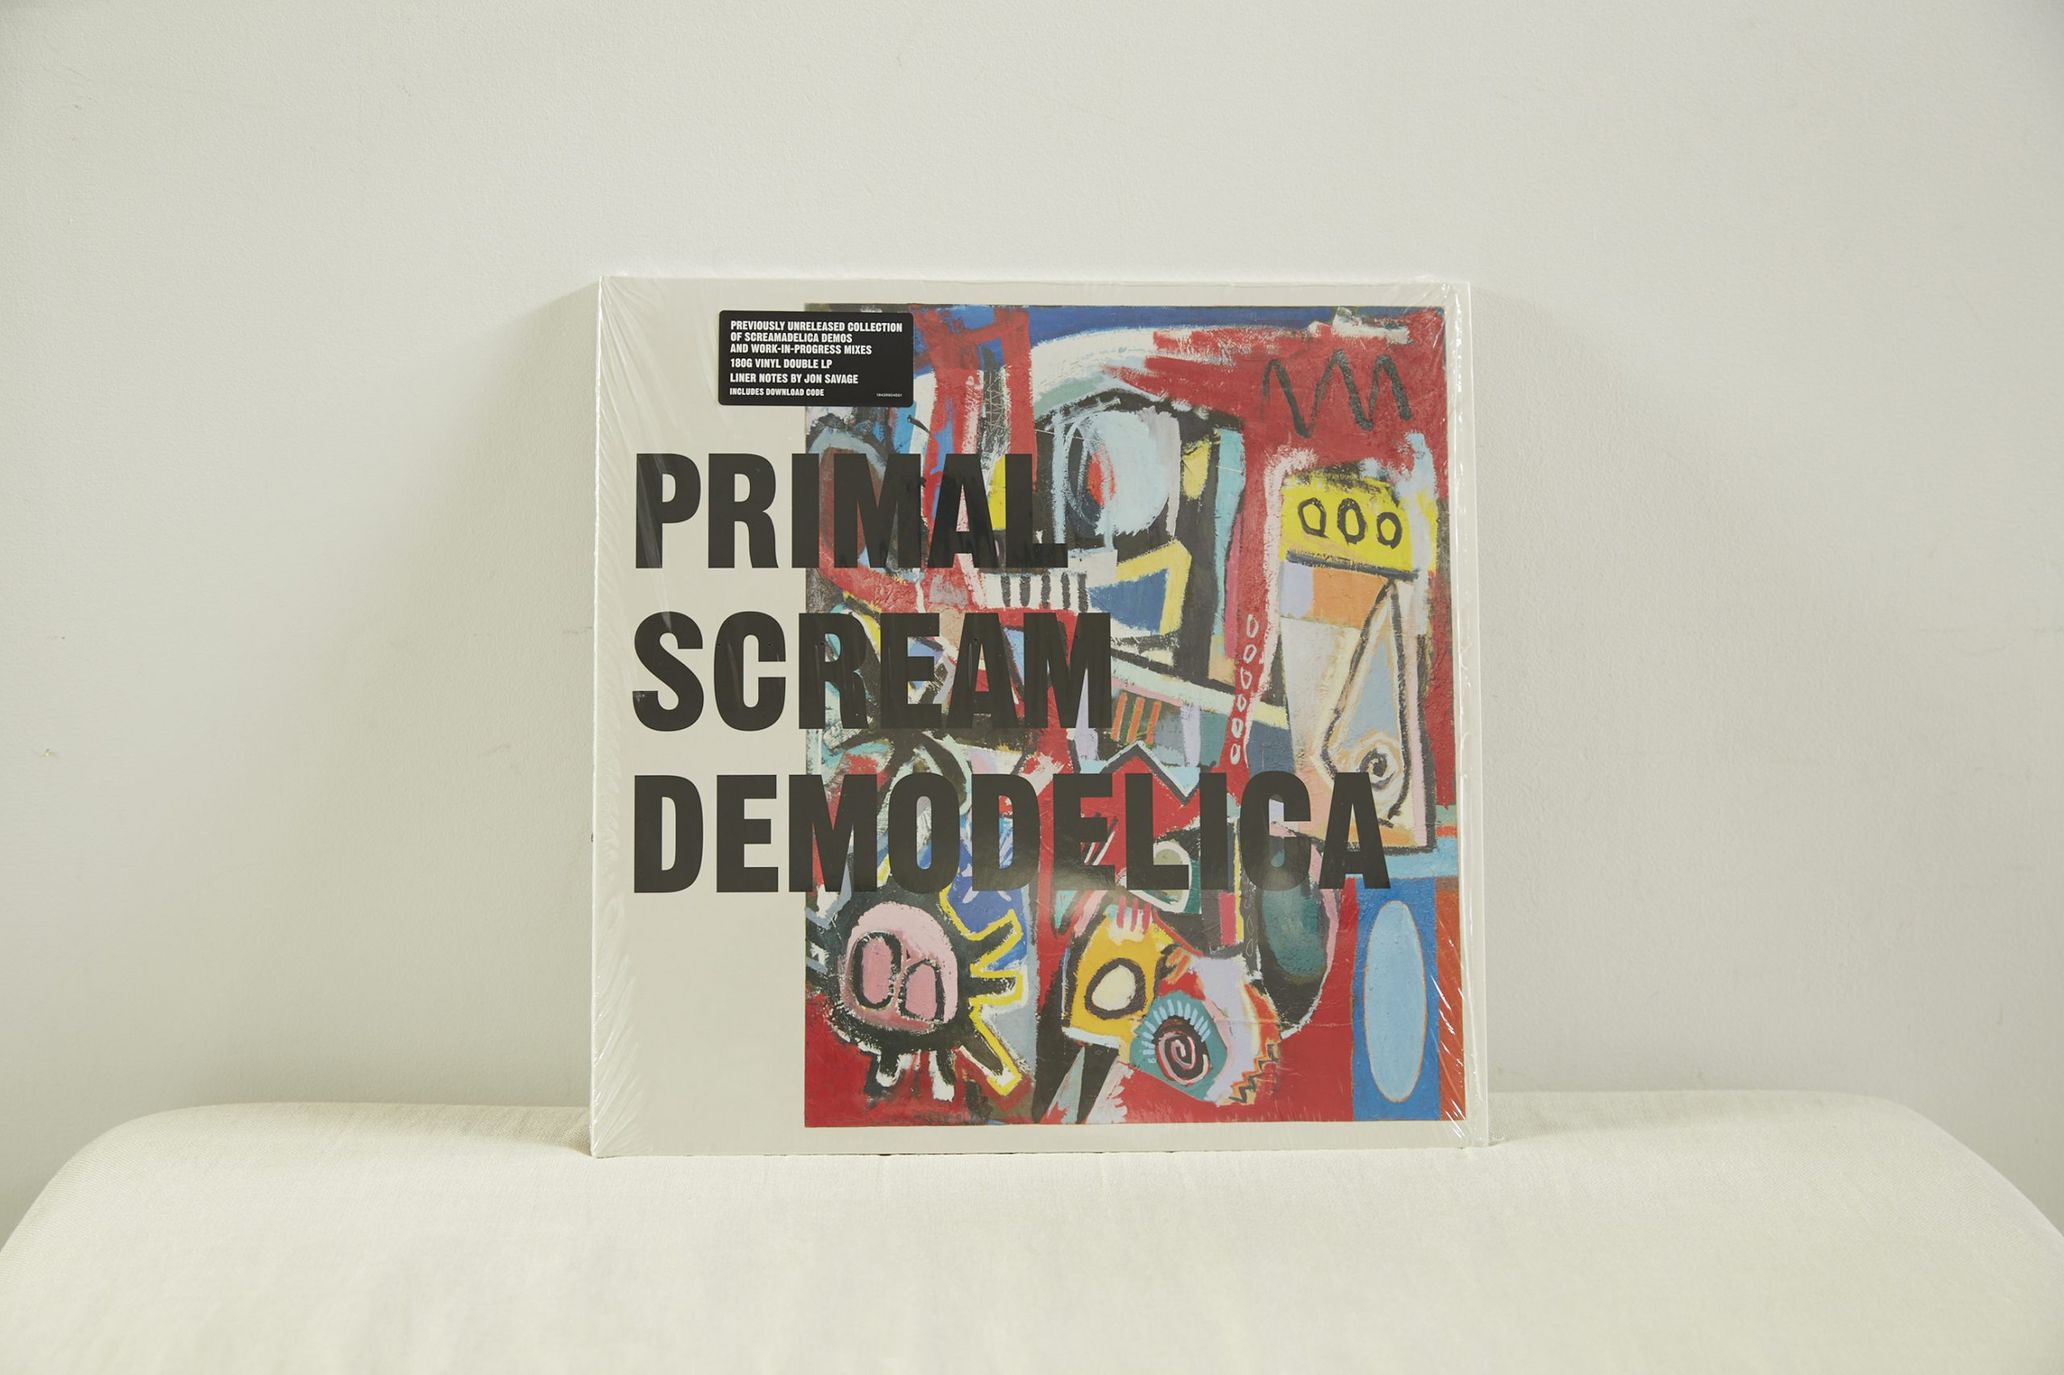 『Screamadelica』発売30周年を記念してリリースされた、未発表のアルバムのデモ音源とミックス音源を収録した「Demodelica」